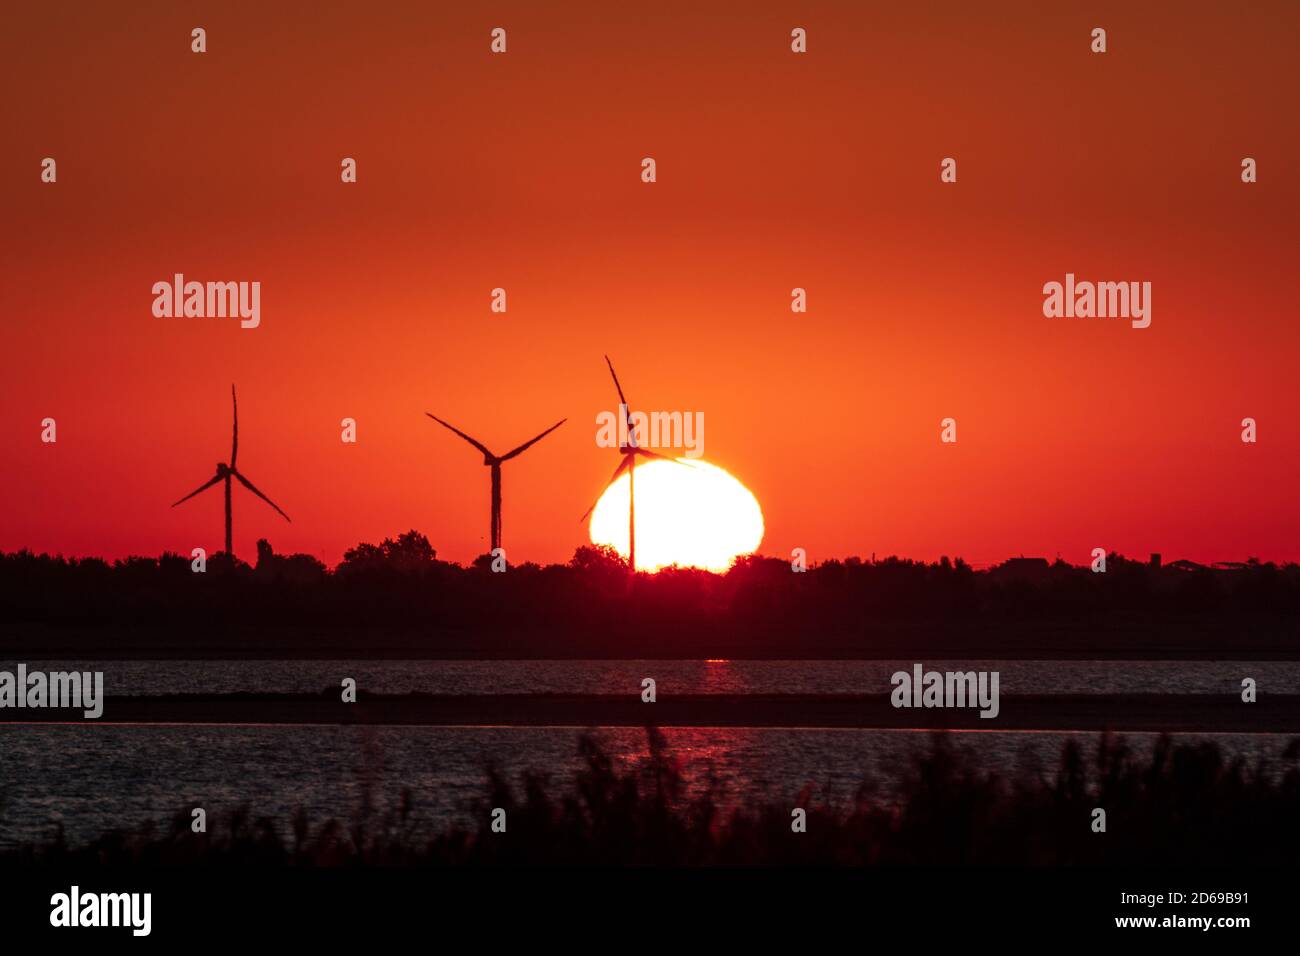 Wind generators farm silhouette on sea coast in sunrise red orange vibrant sky and big rising sun. Energy turbines sustainable industry Stock Photo